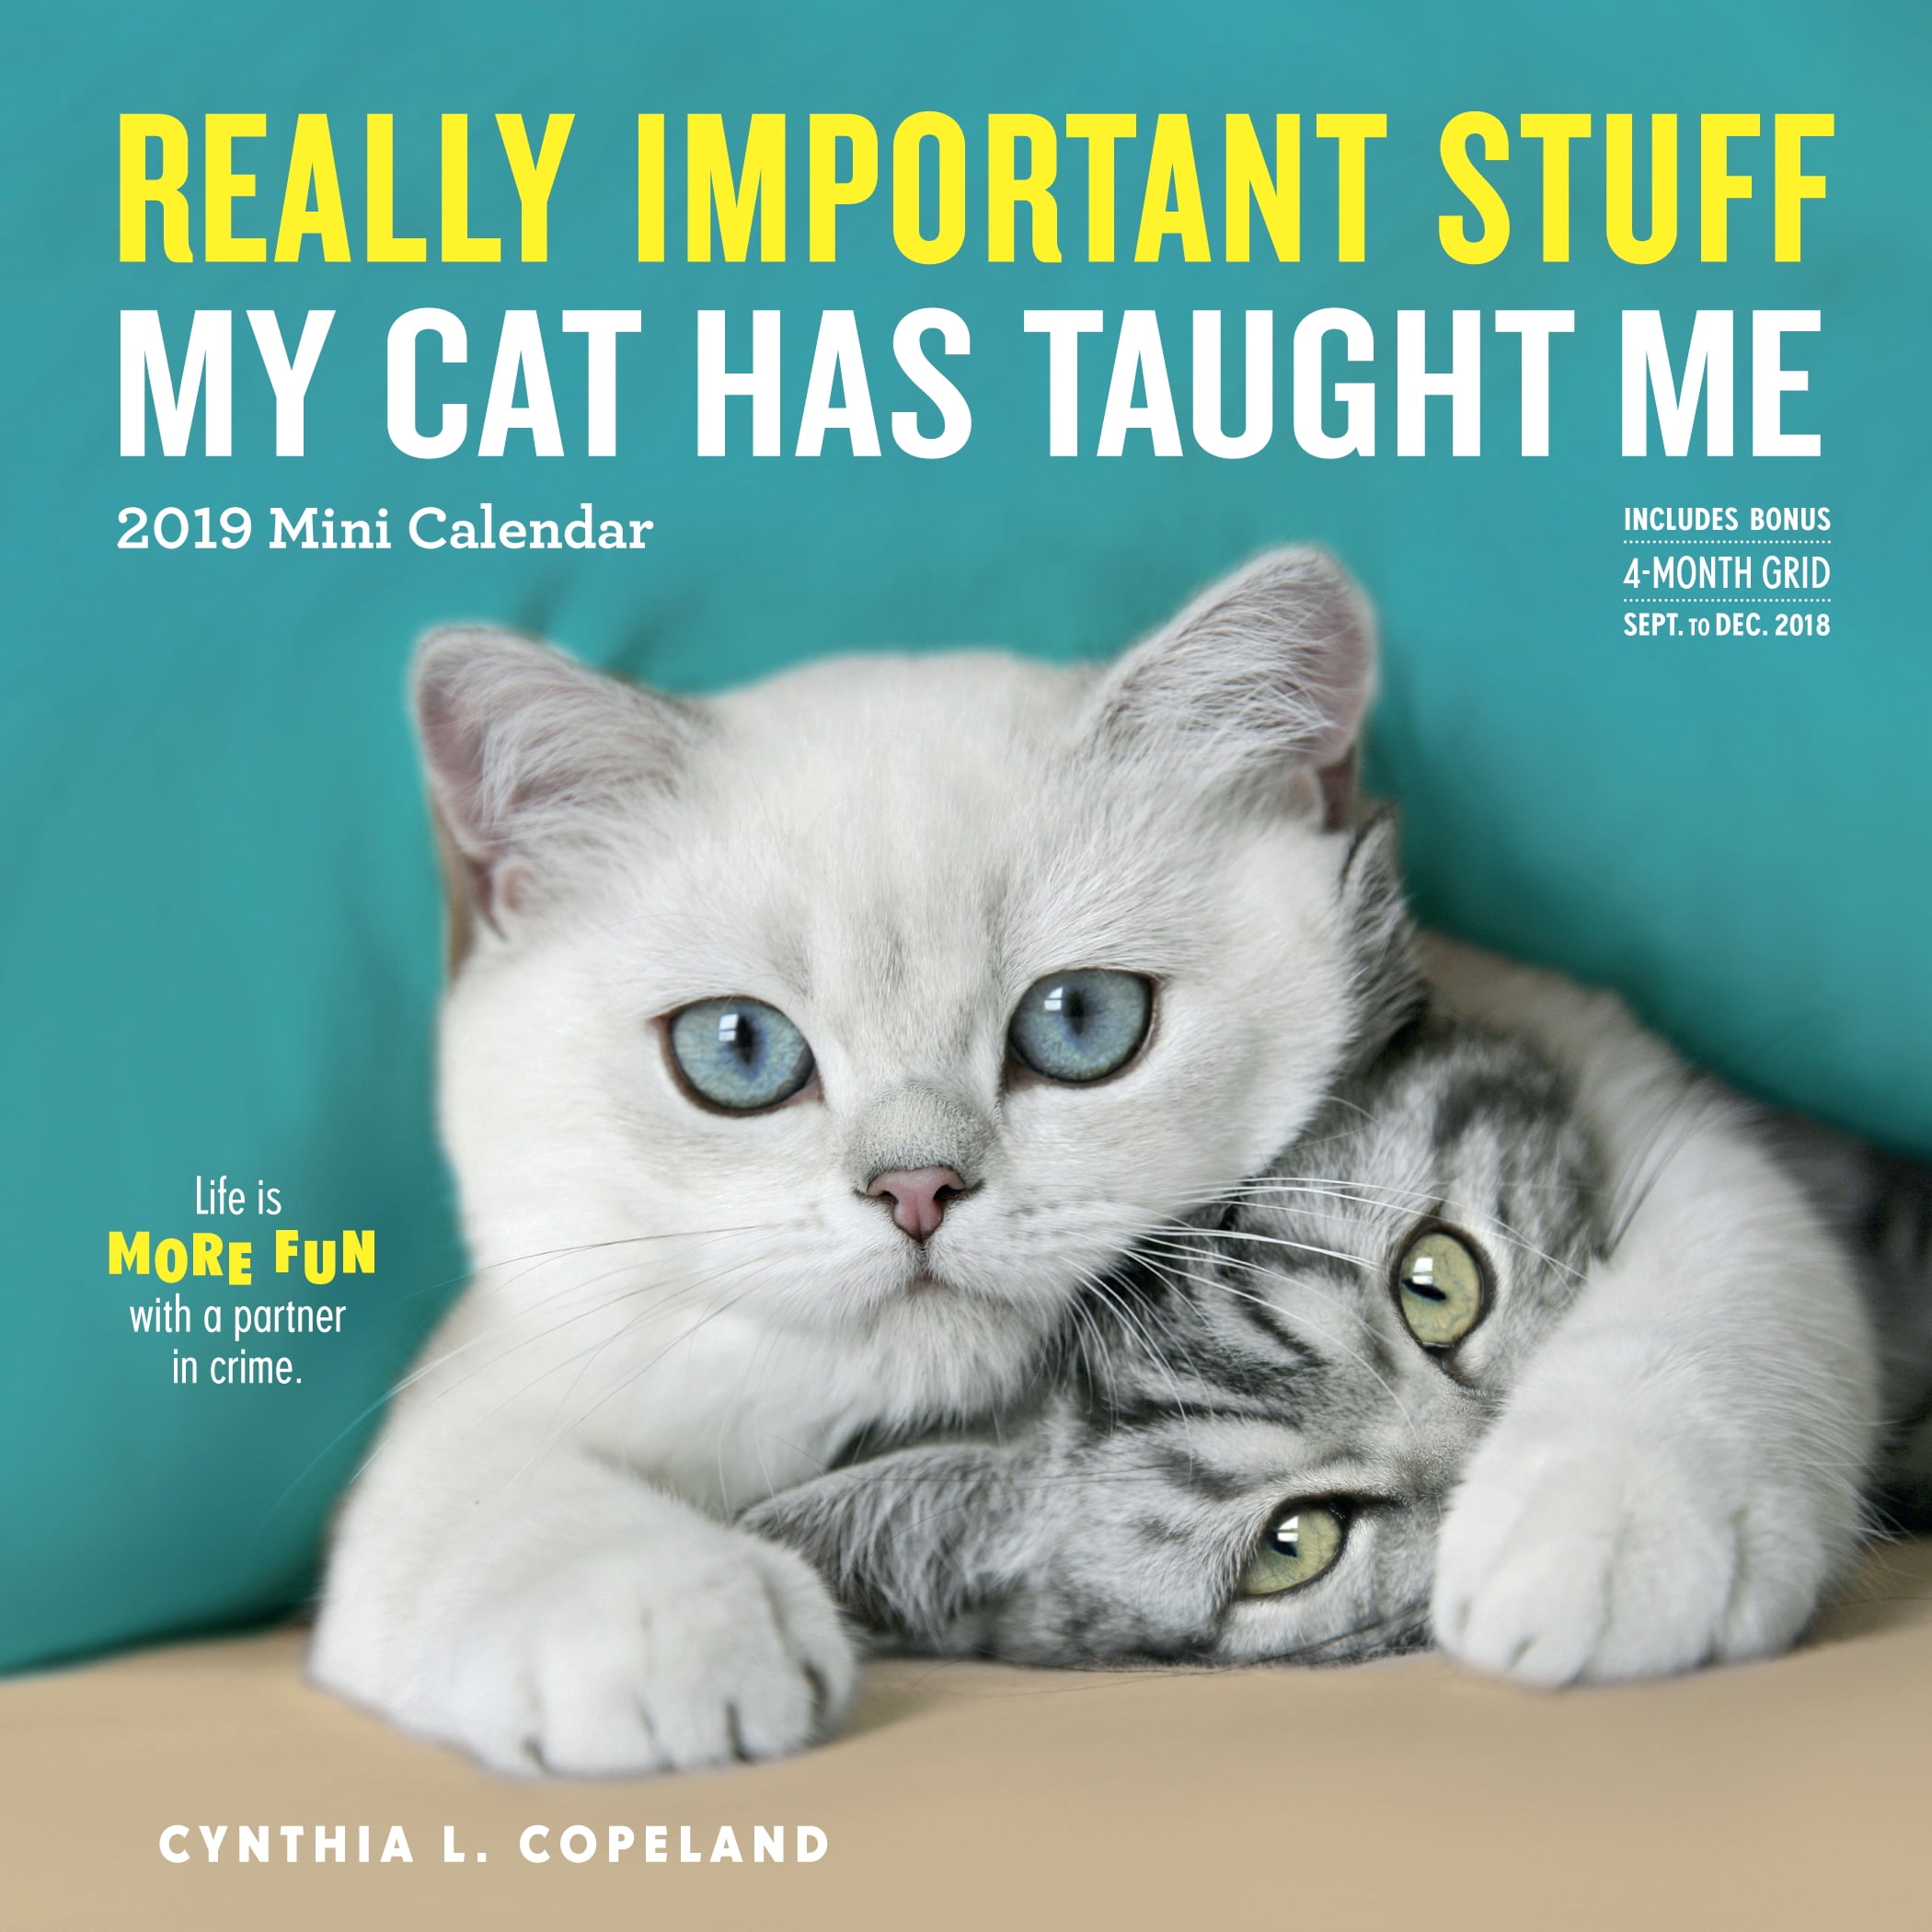 Really Important Stuff My Cat Has Taught Me Mini Calendar 2019
Epub-Ebook